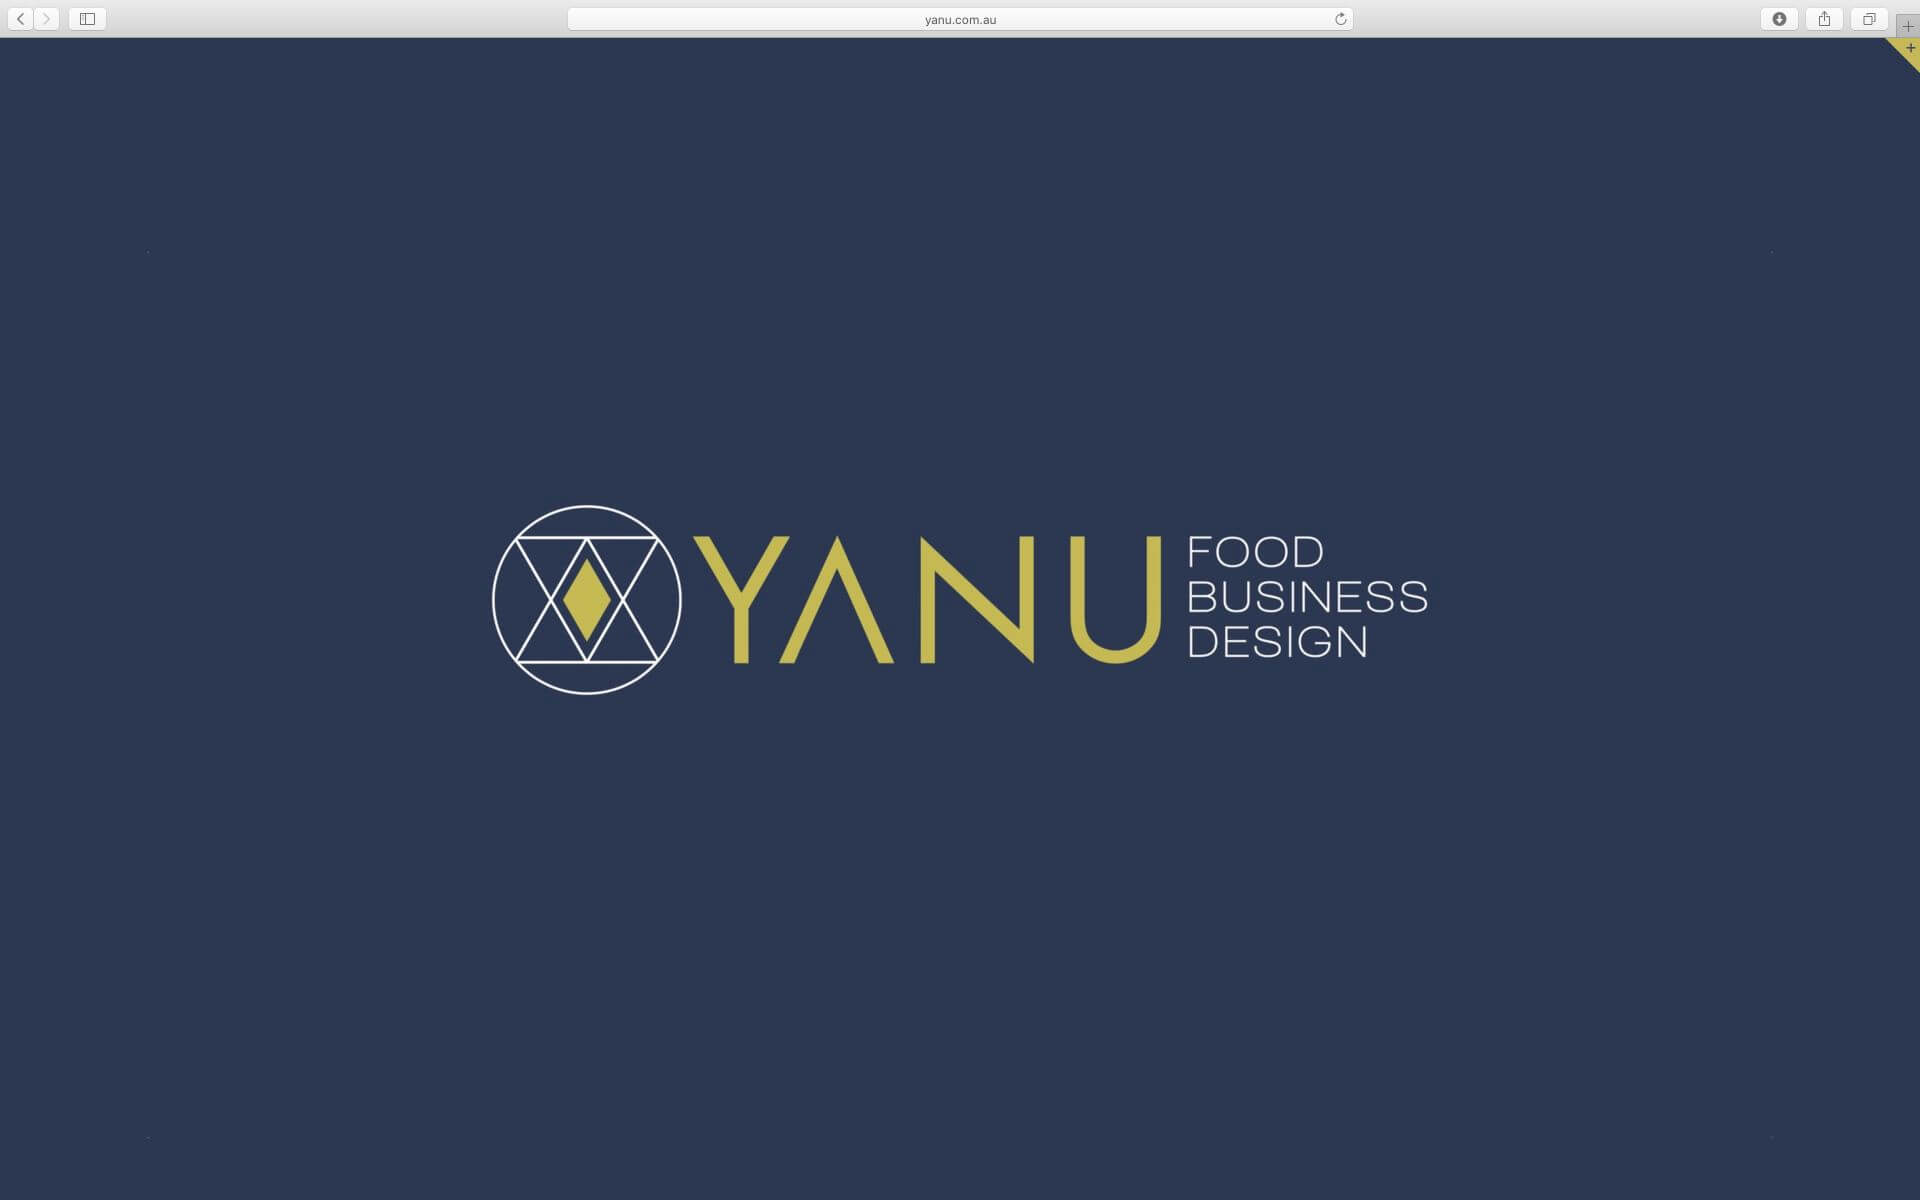 YANU Website